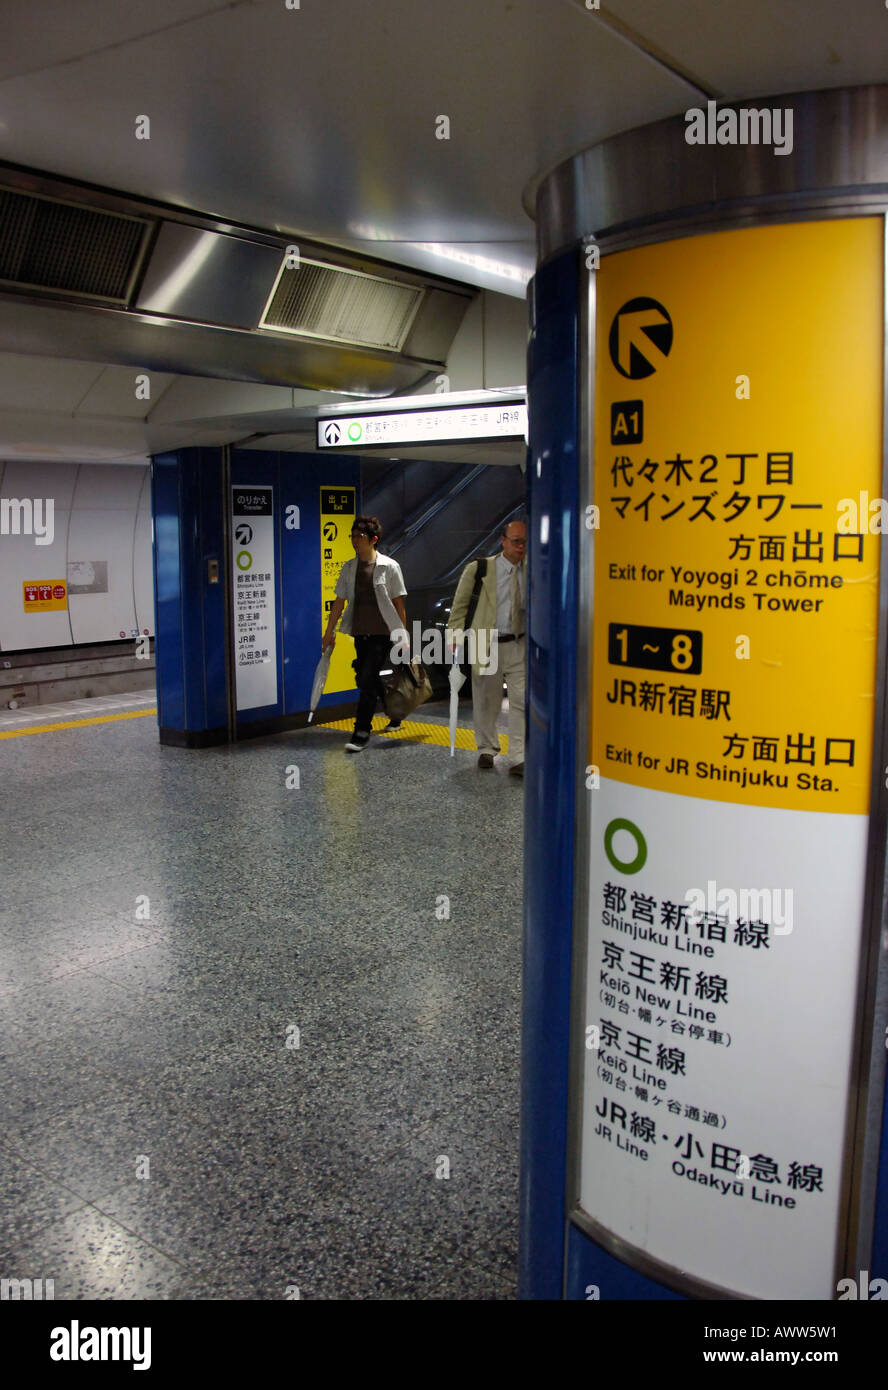 Station platfom, Tokyo subway system Stock Photo